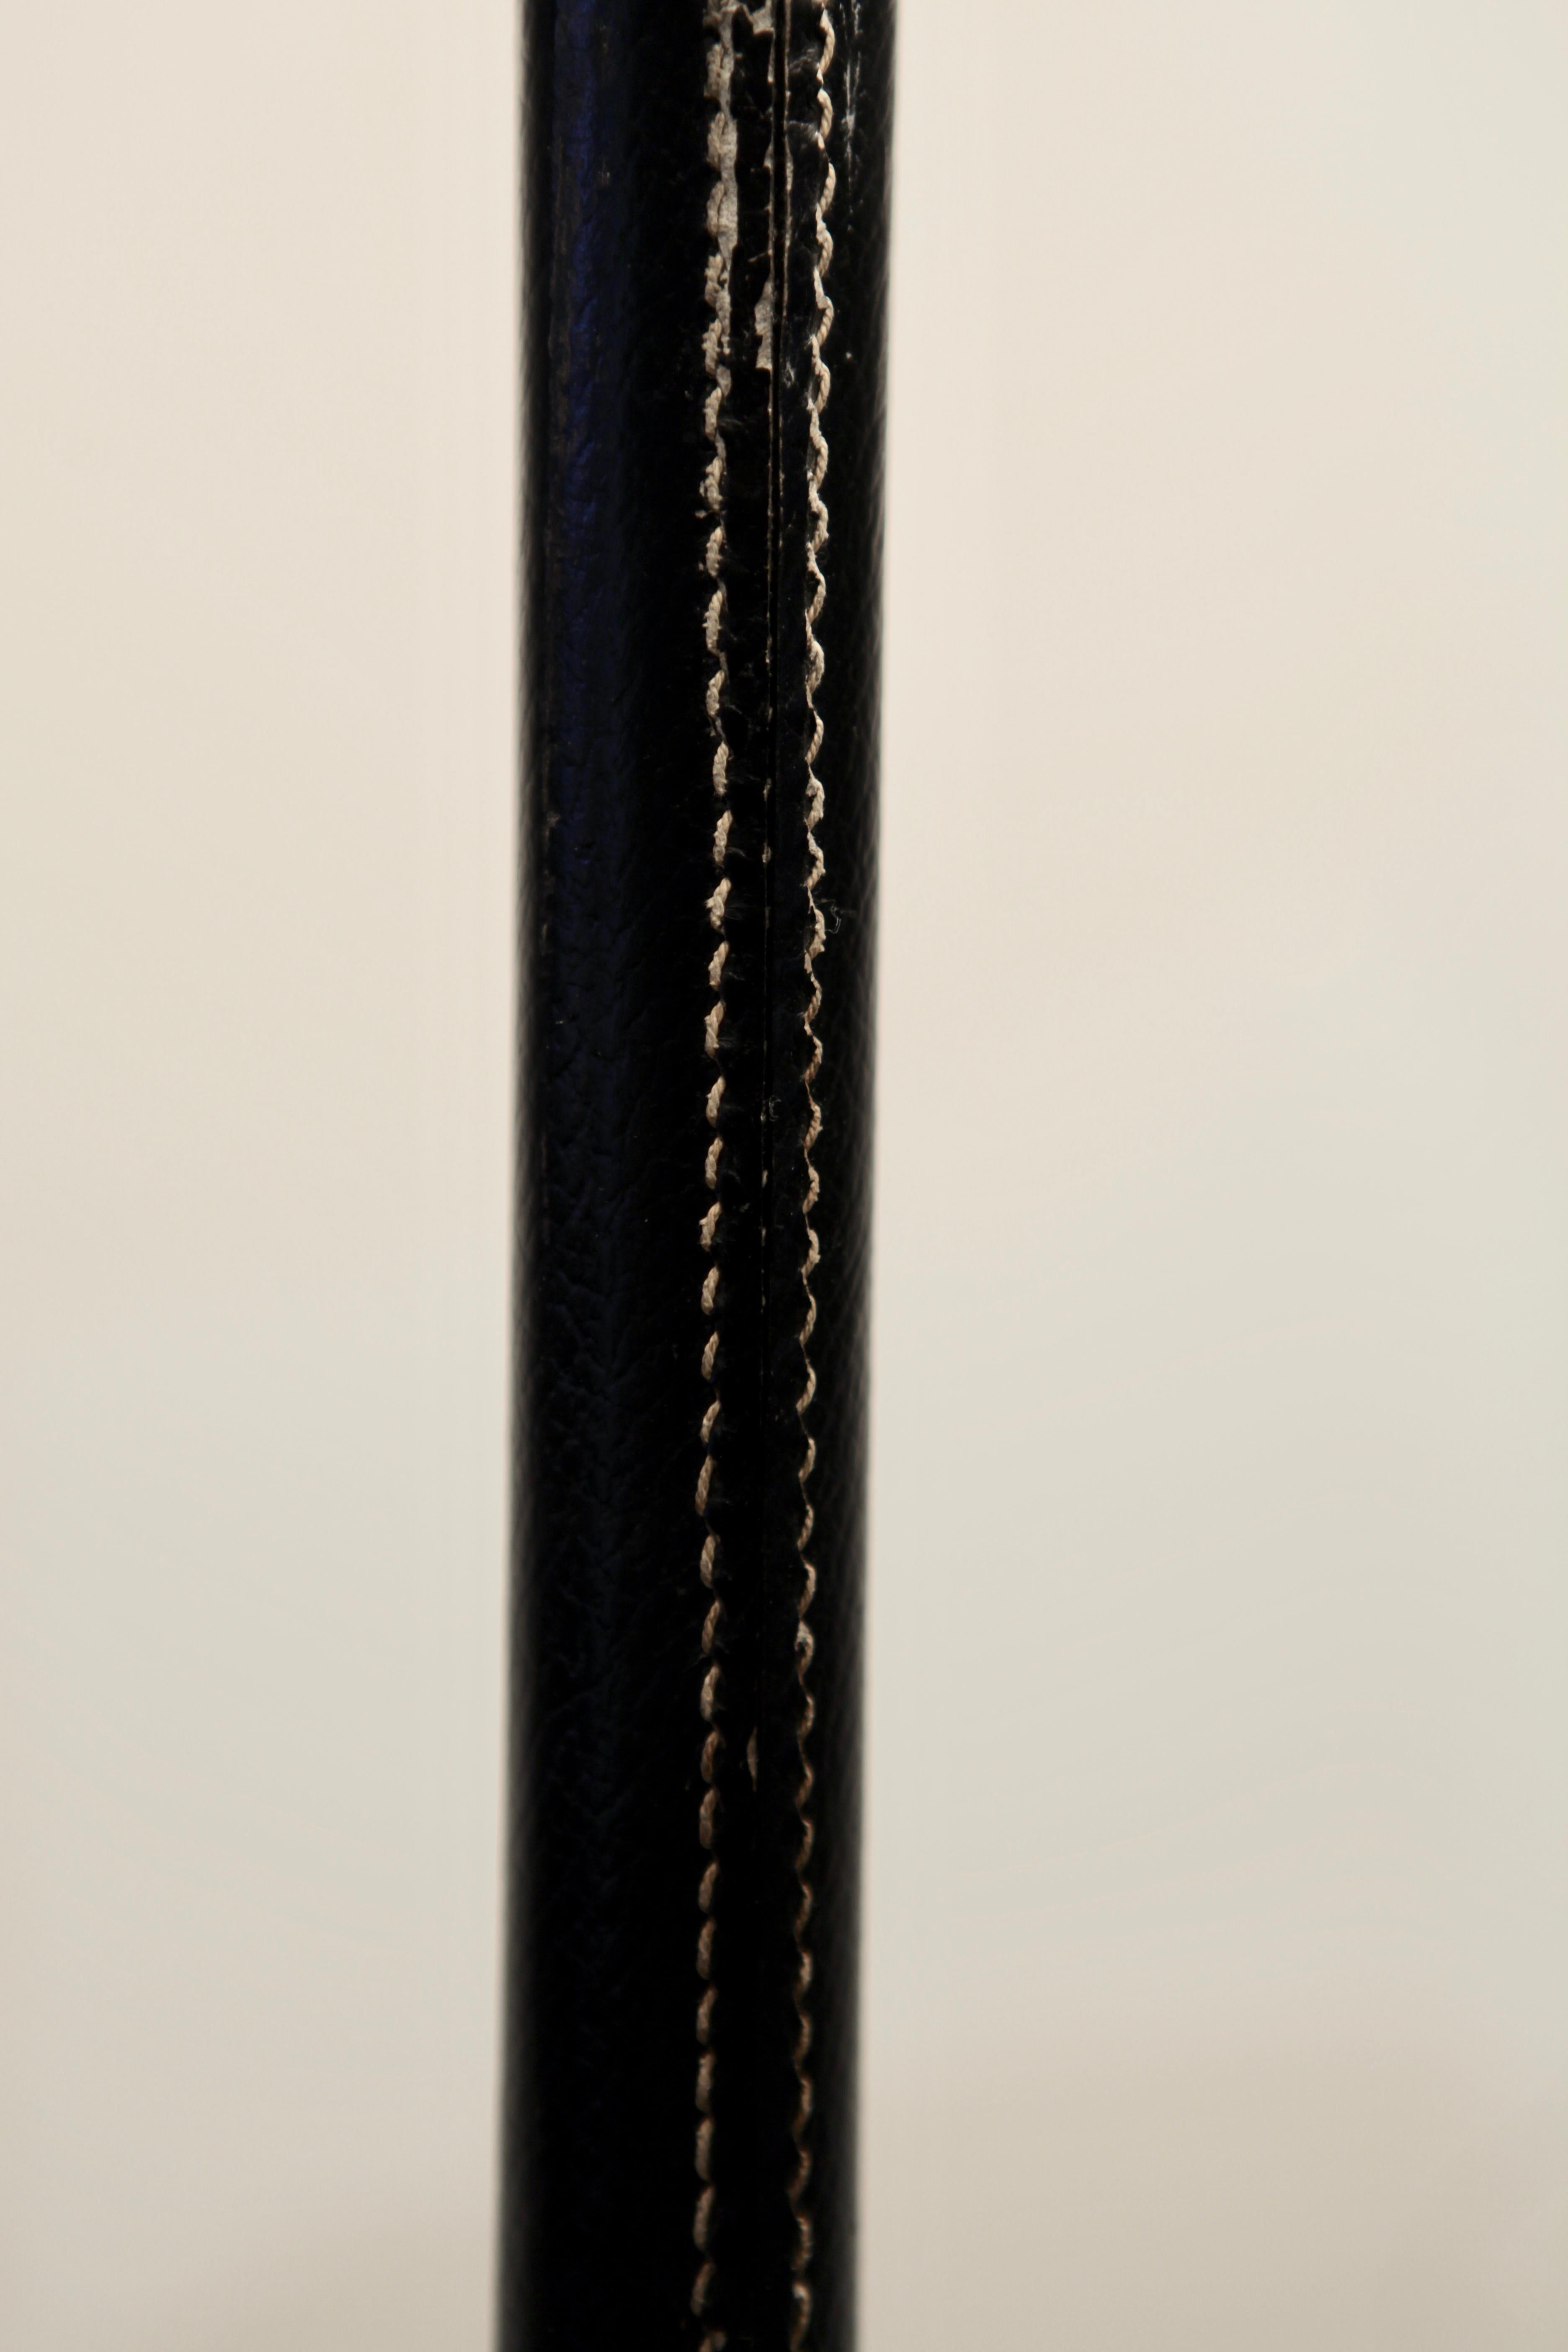 Italian Gino Sarfatti, Attributed Floor Lamp, Model 1025, Brass and Leather